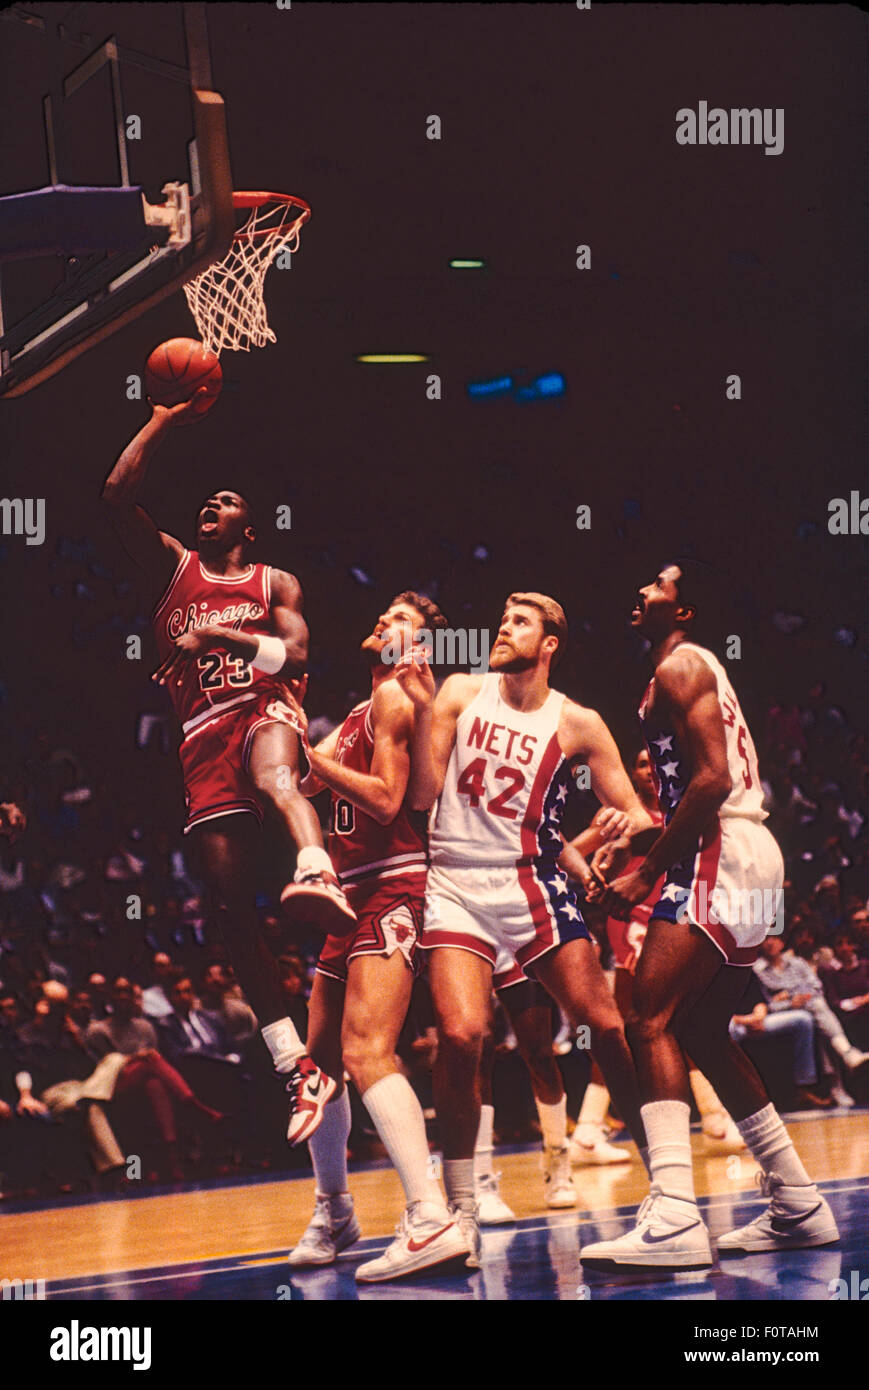 Michael Jordan competing for the NBA Chicago Bulls Stock Photo